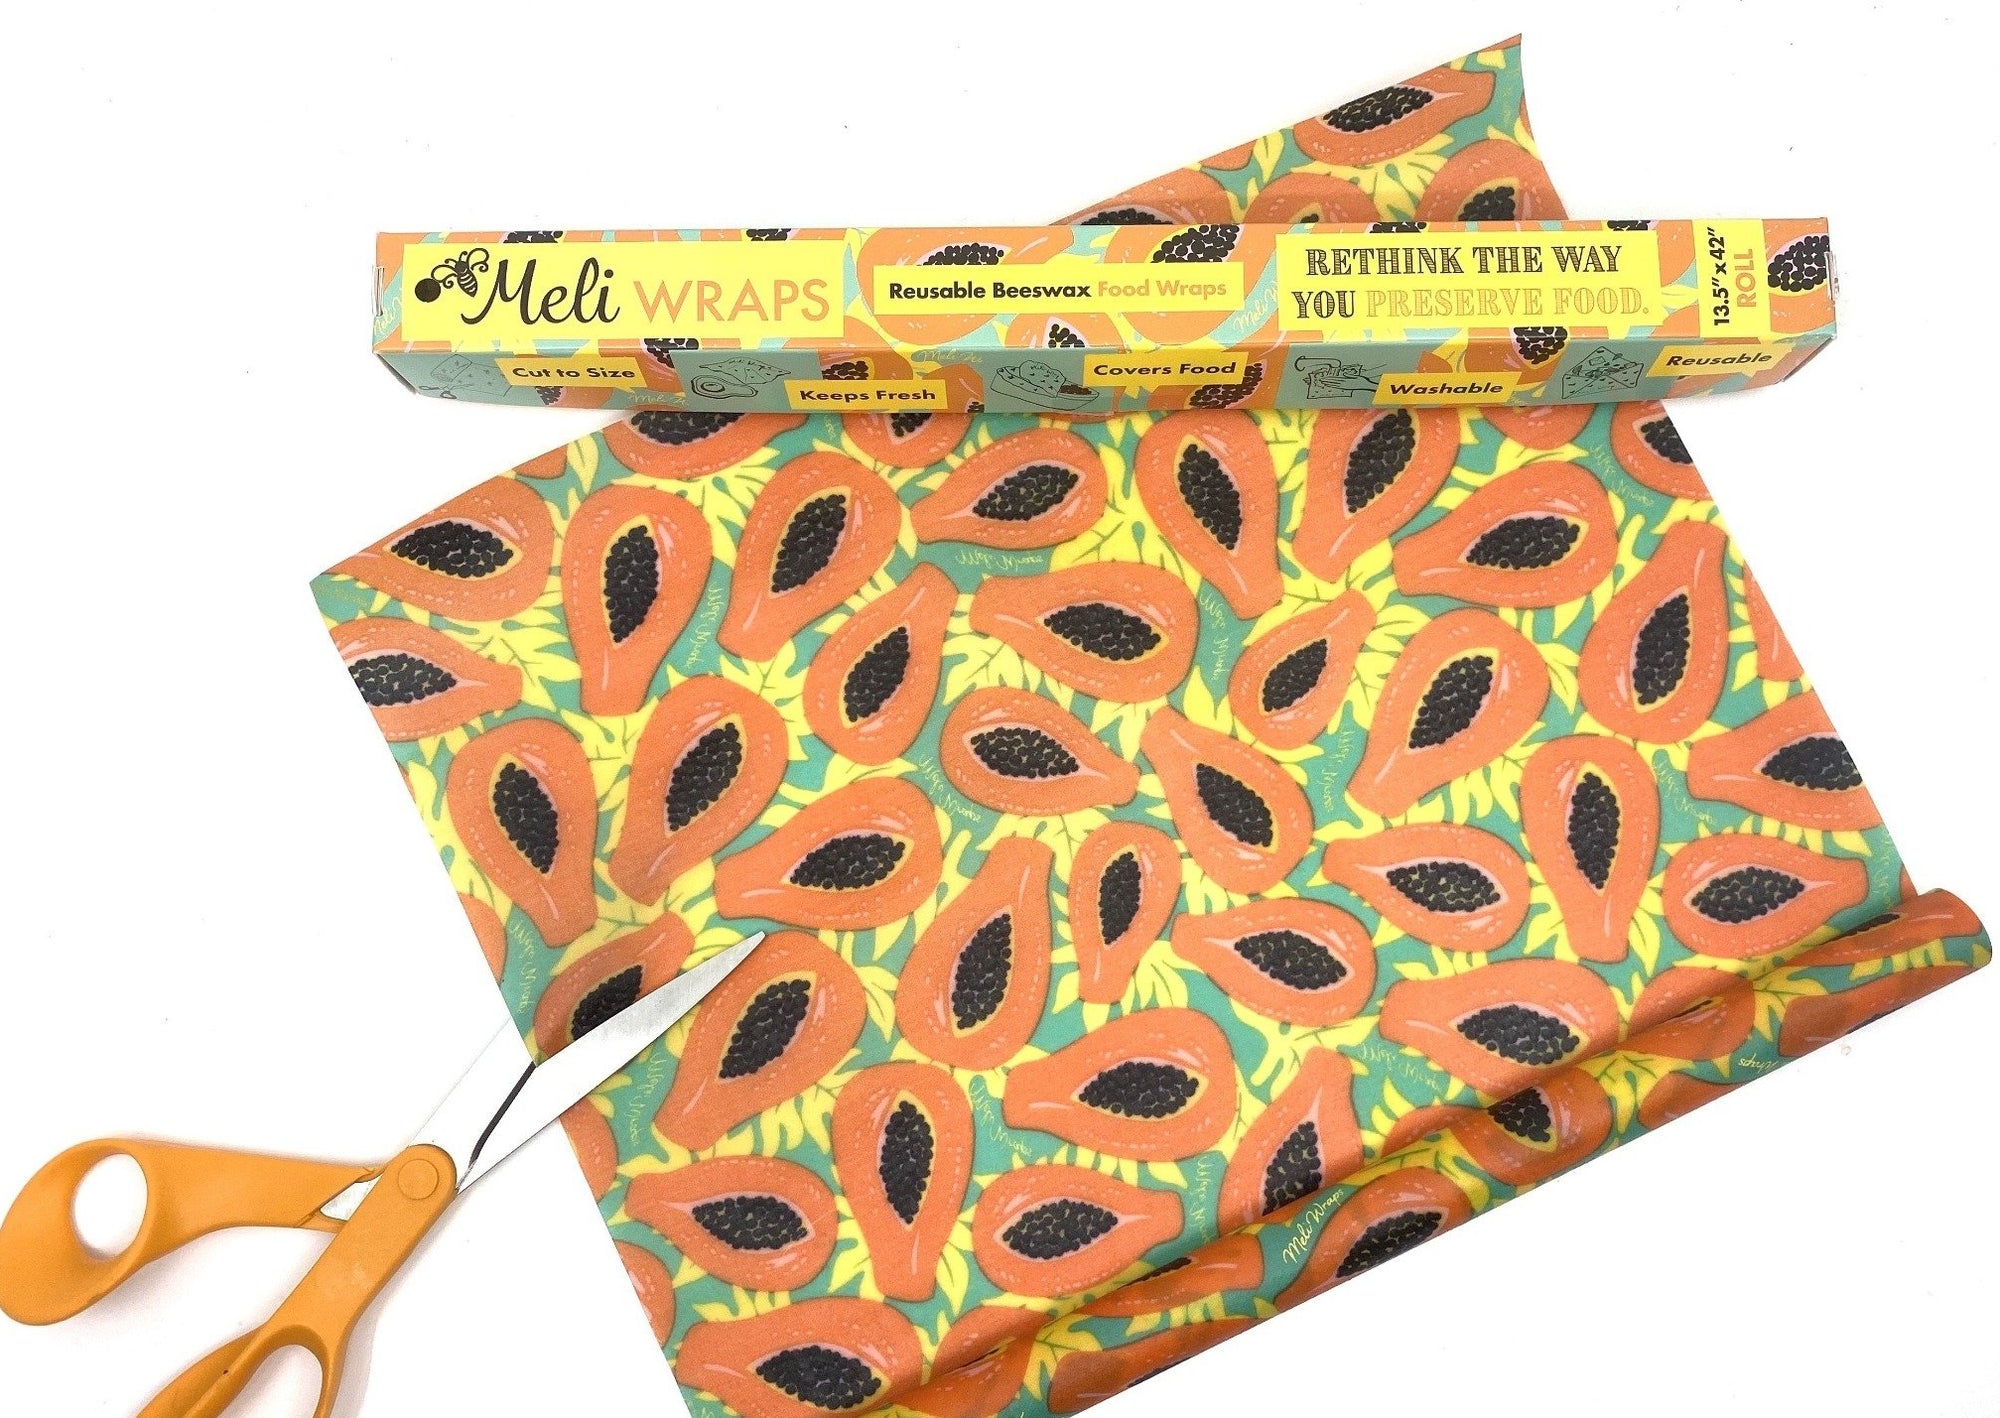 Beeswax Wrap Bulk Roll - Purple Papaya Print - Meli Wraps